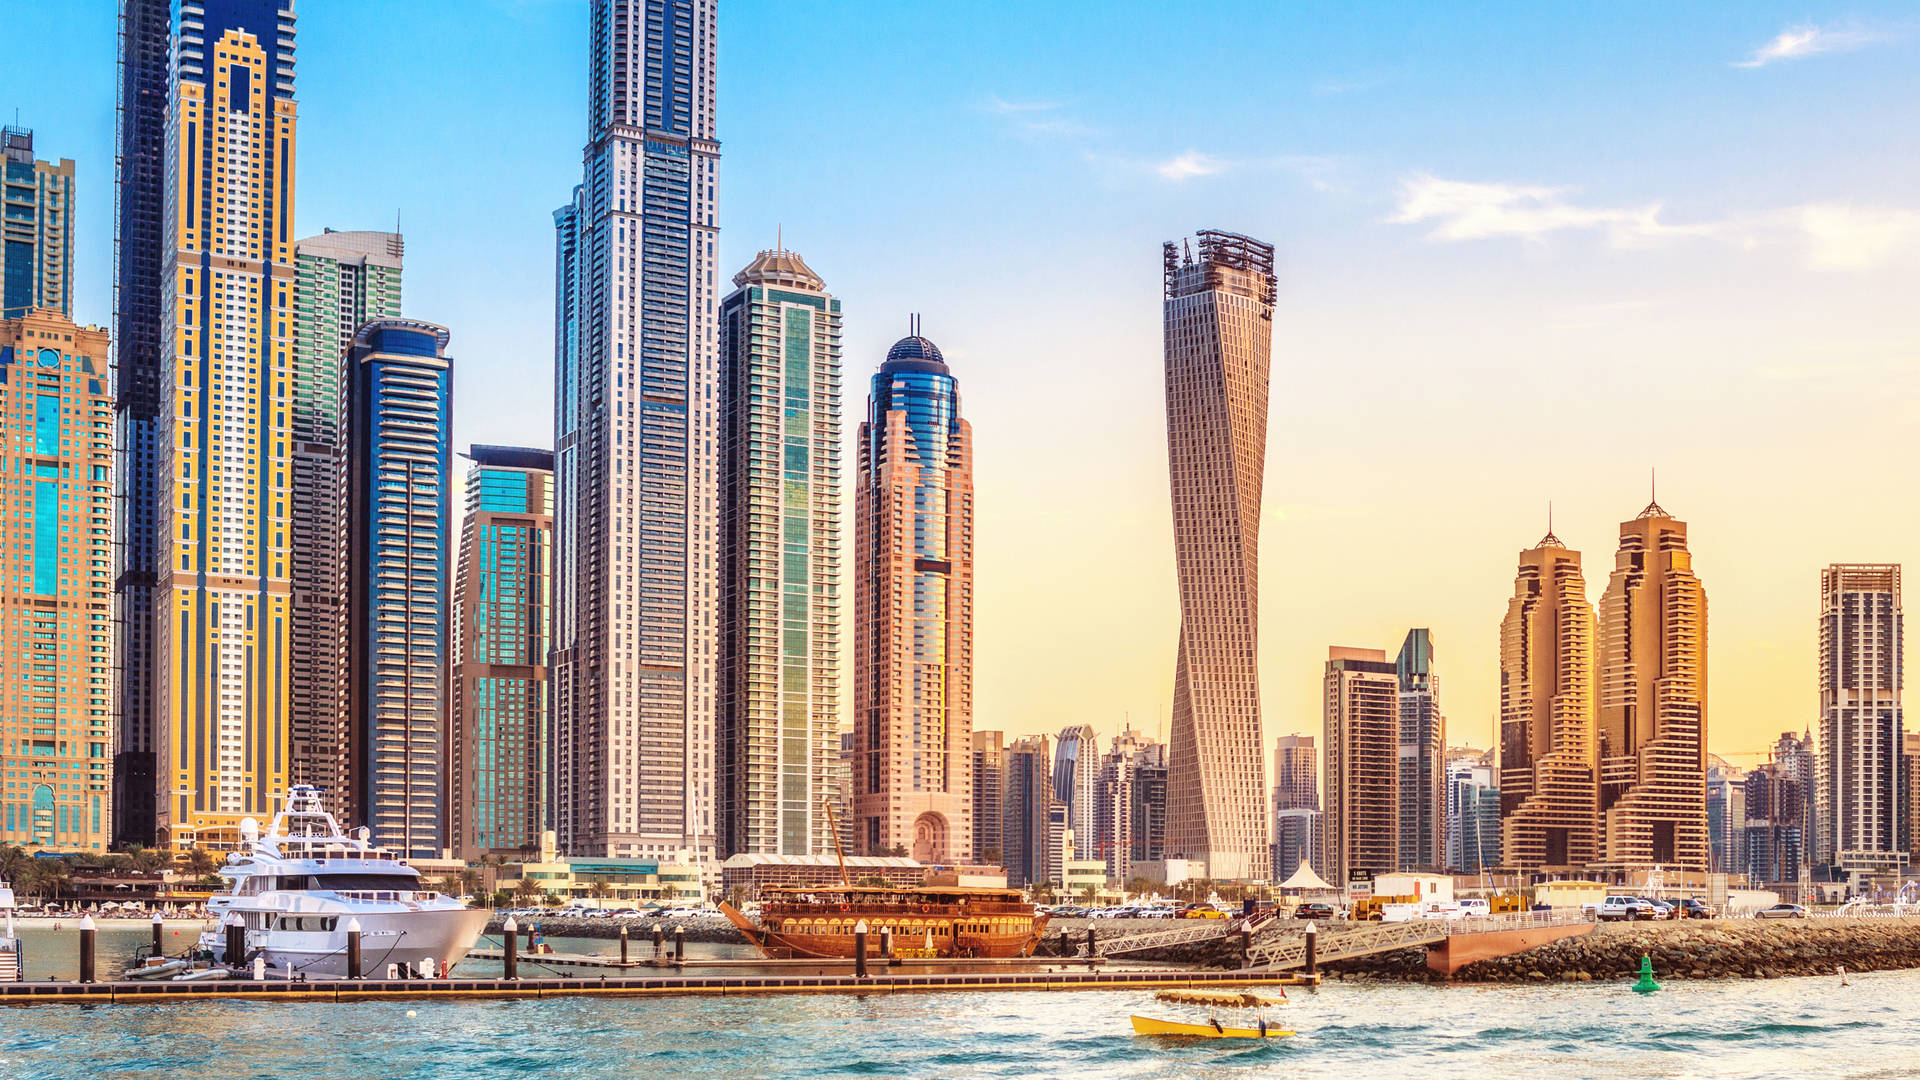 Dubai's skyscrapers and modern buildings